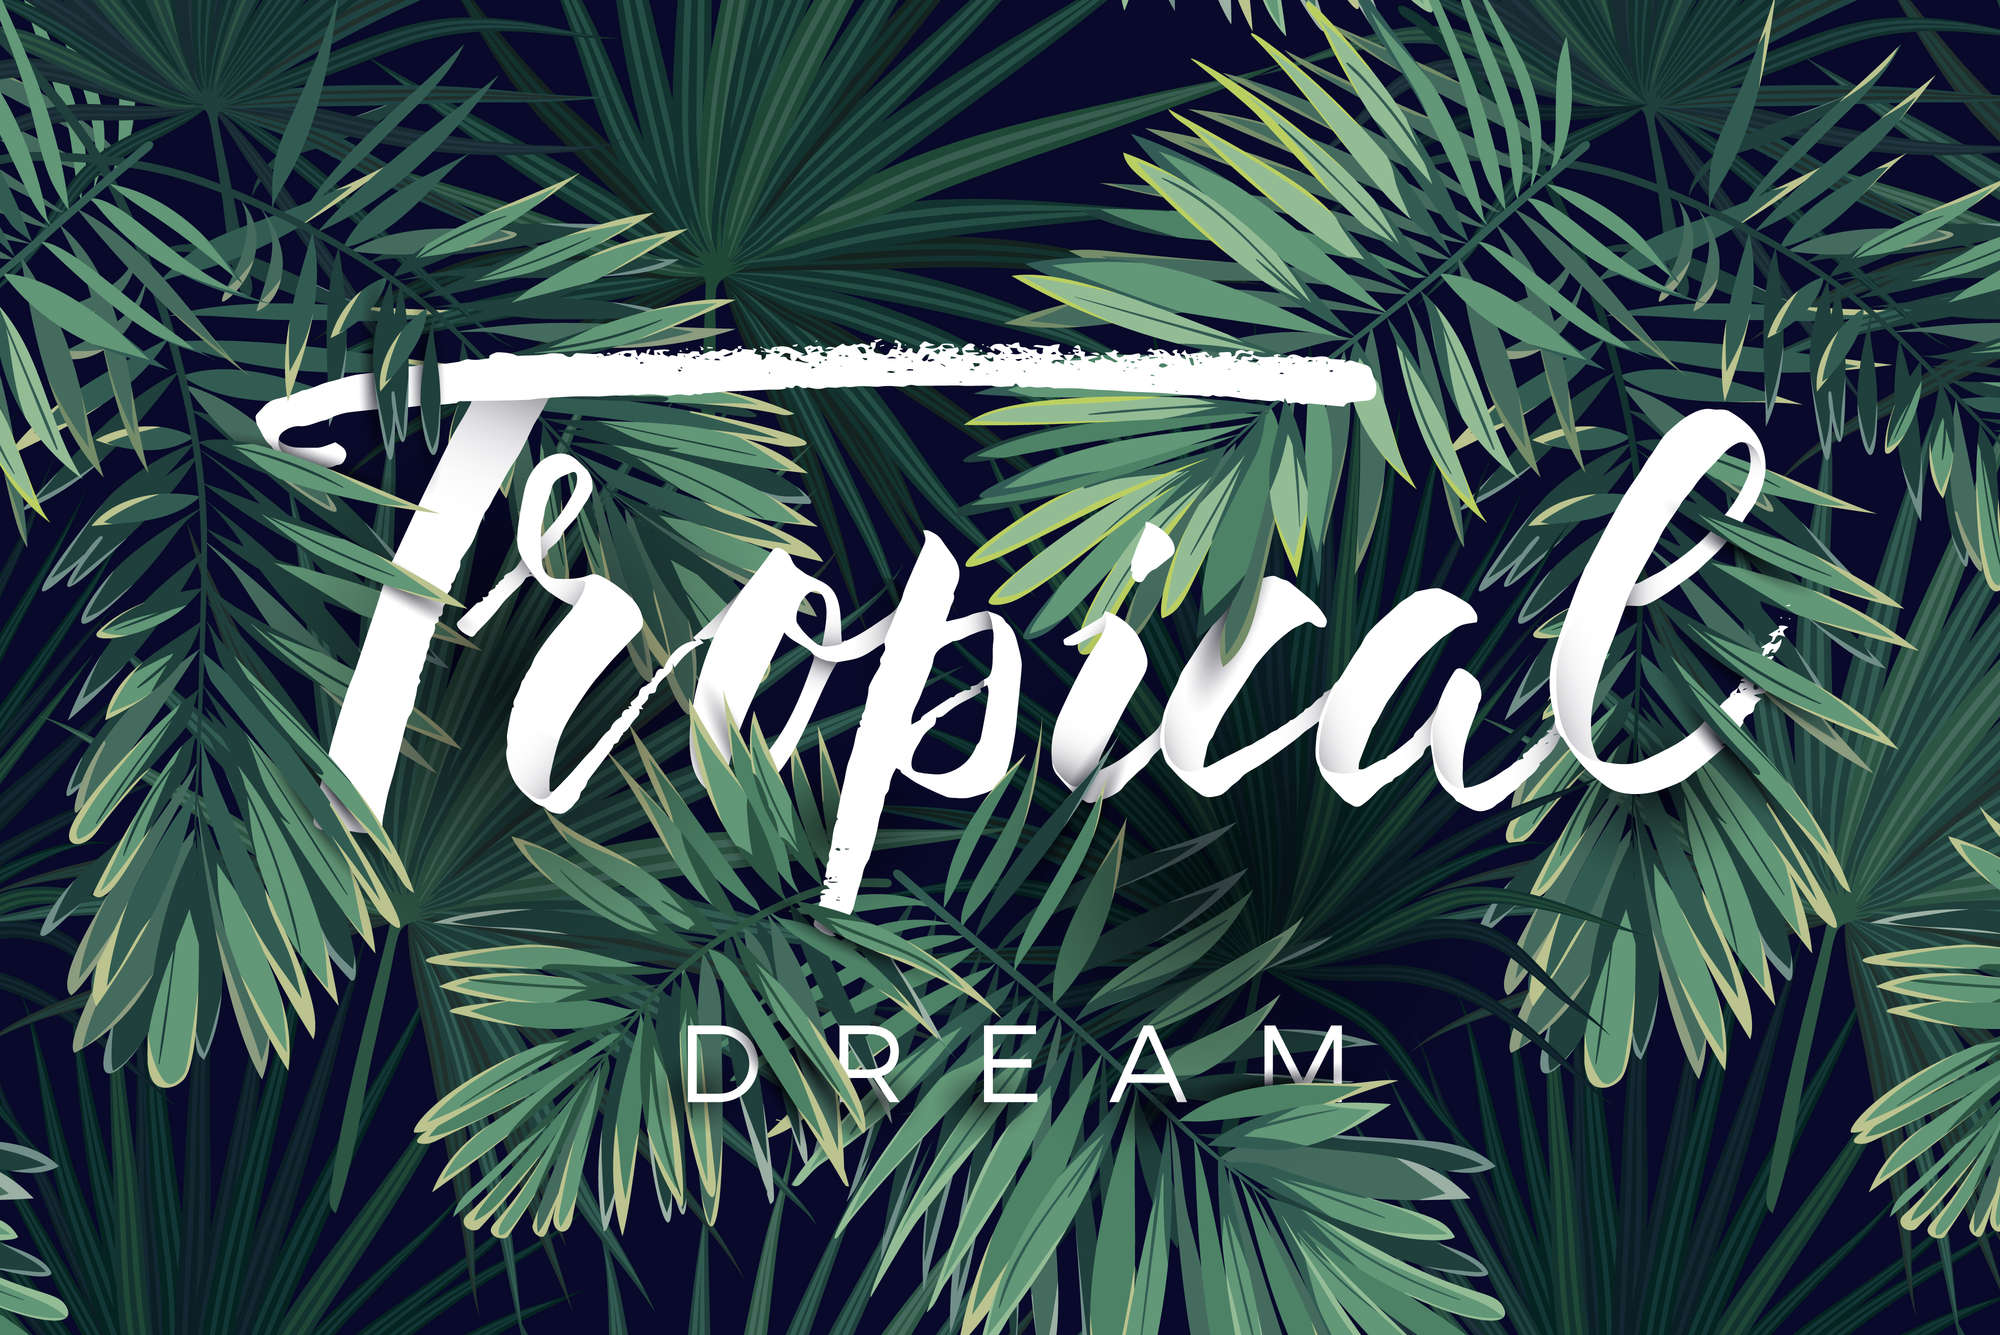             Grafik Fototapete "Tropical Dream" Schriftzug auf Premium Glattvlies
        